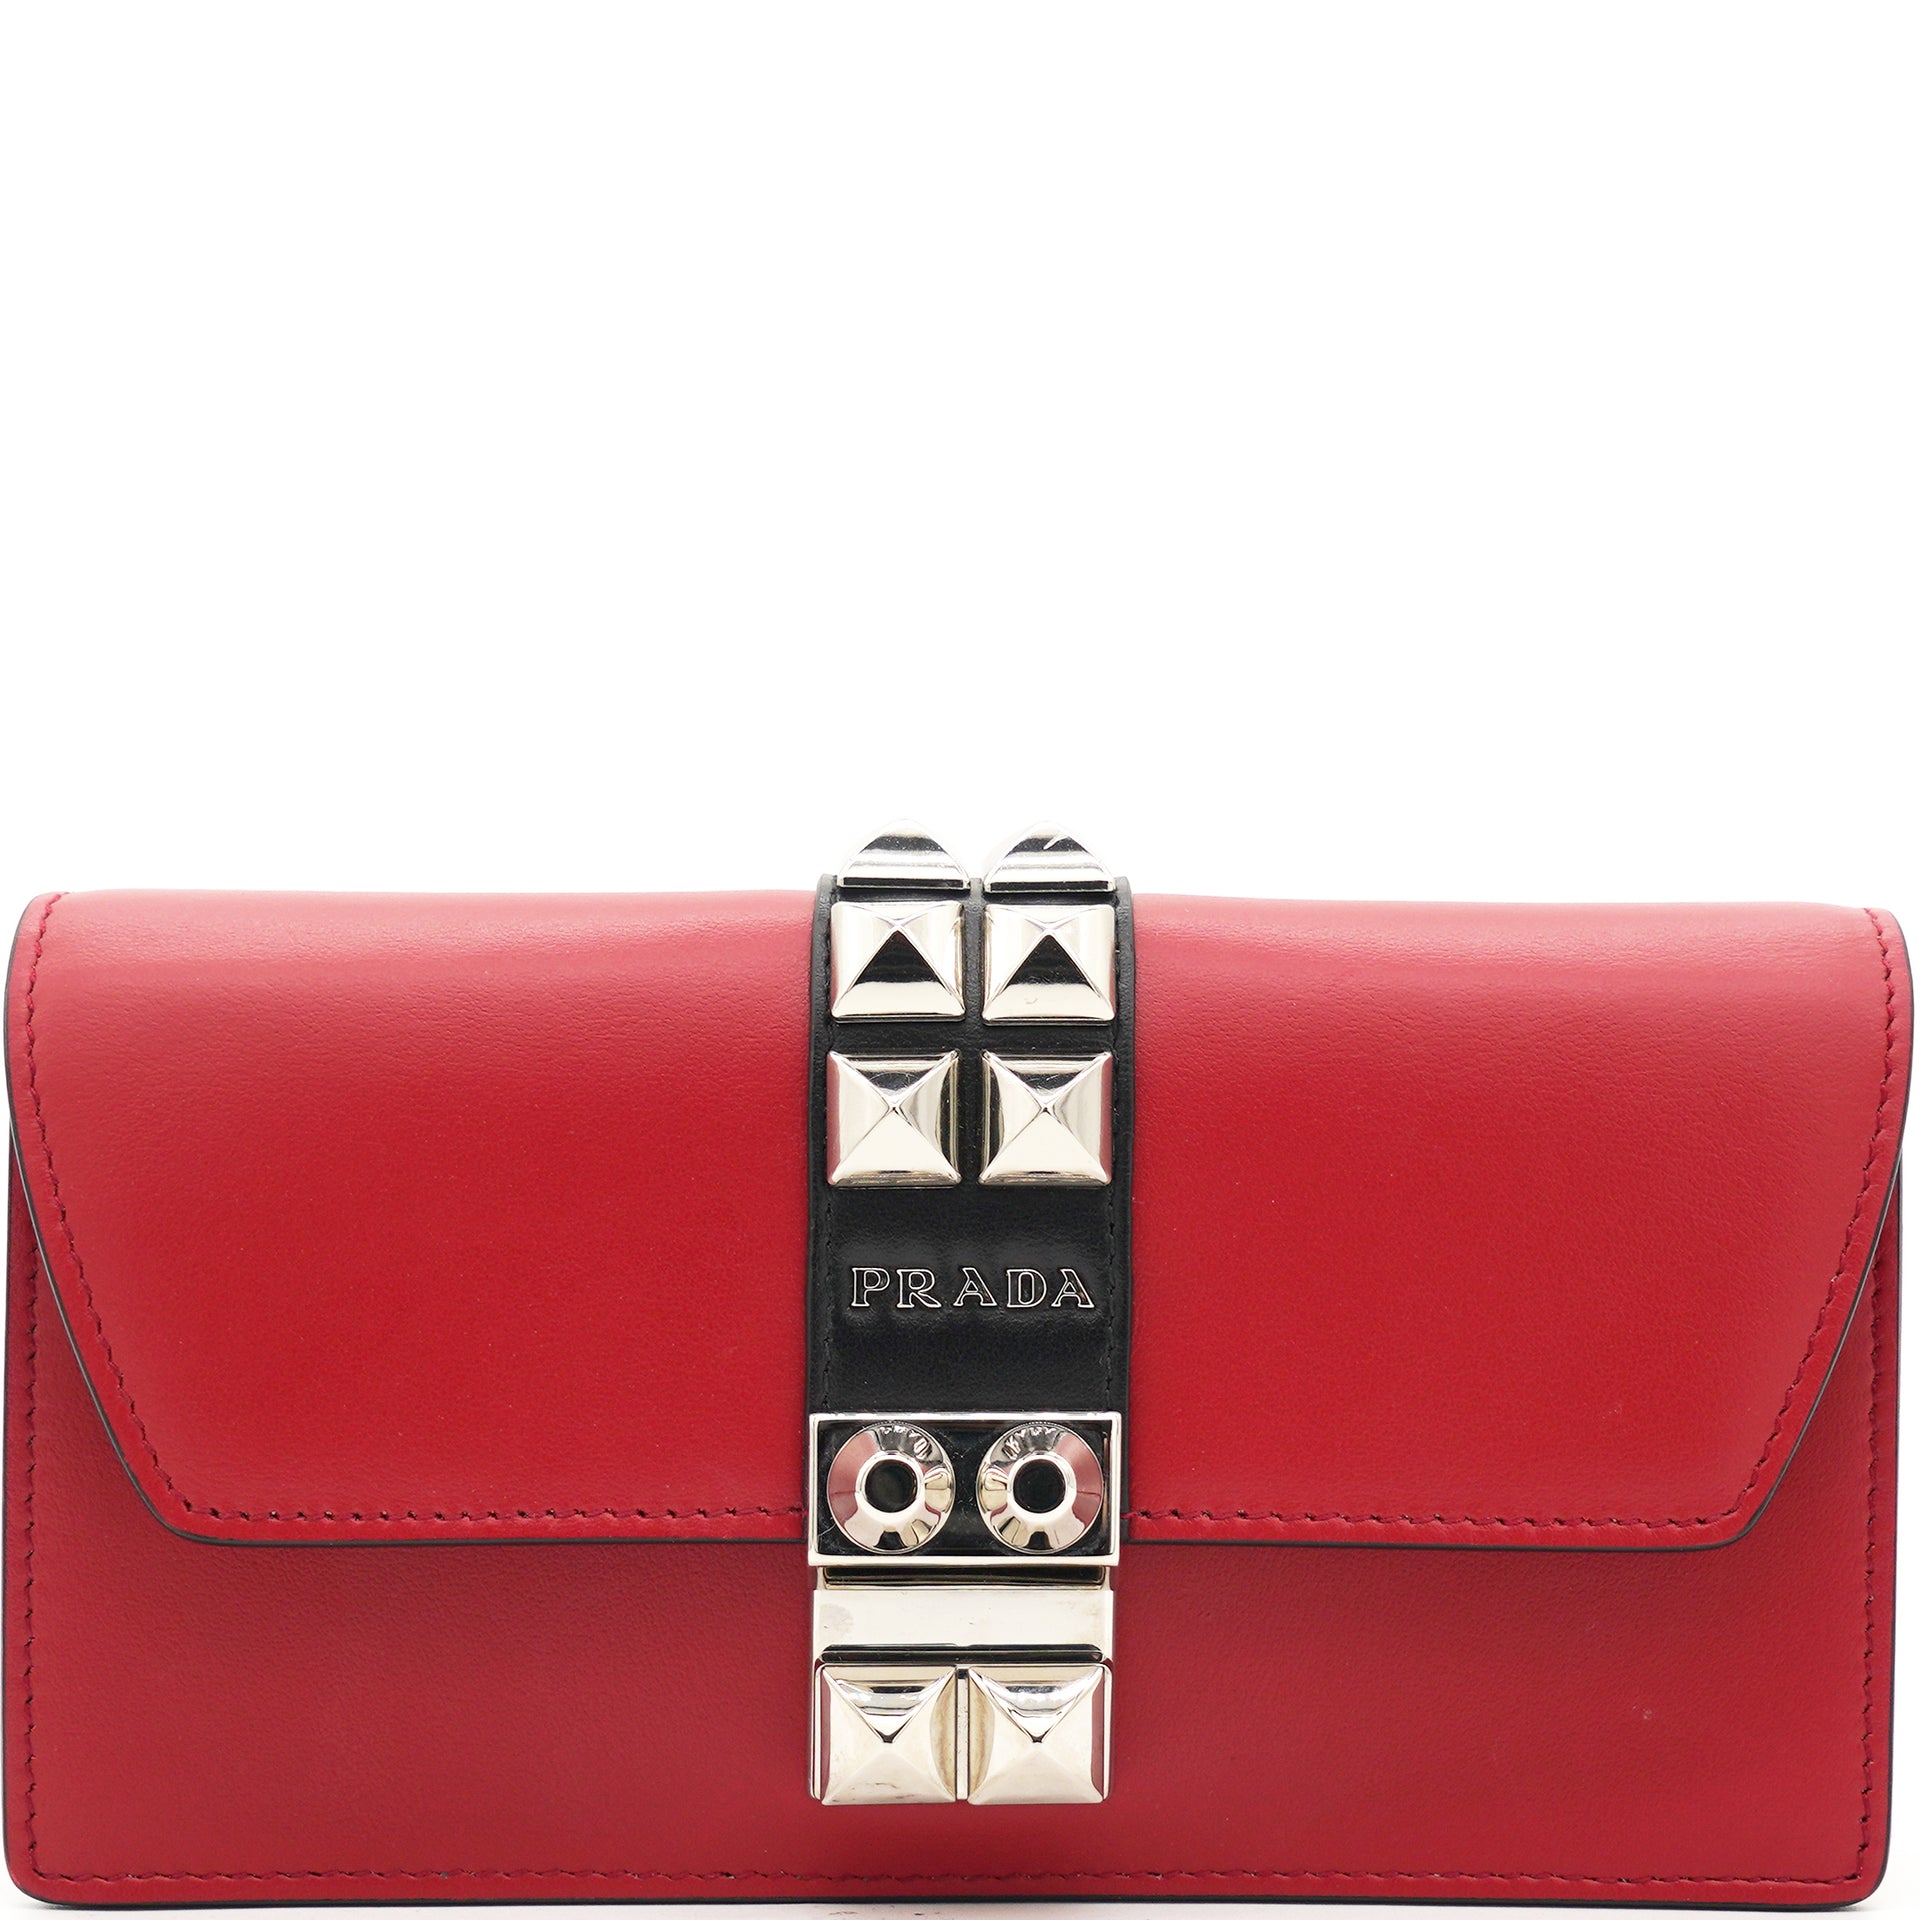 Elektra Studded Clutch bag Red